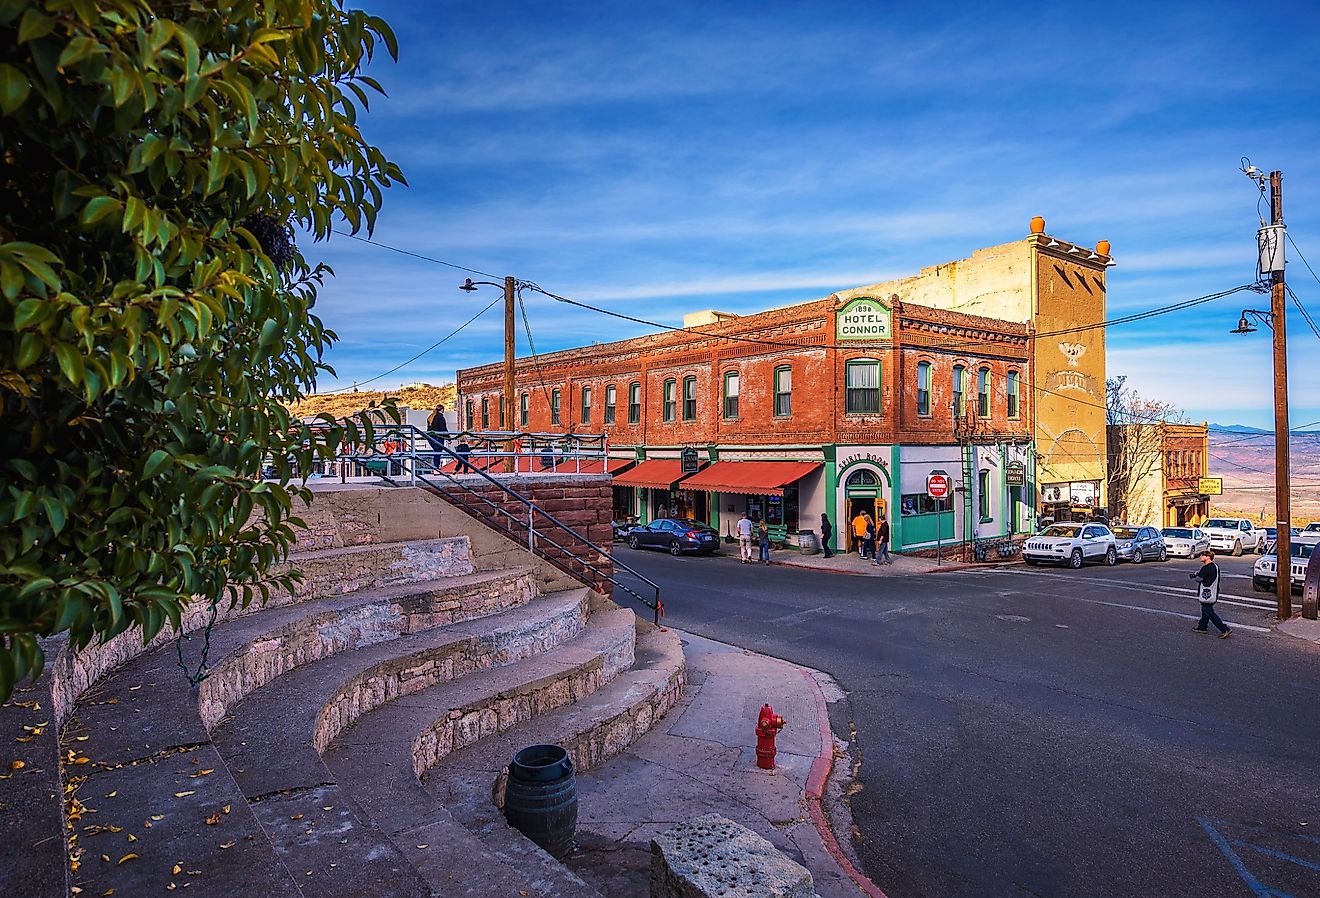 Historic Connor Hotel on the Main Street of Jerome, Arizona. Image credit Nick Fox via Shutterstock